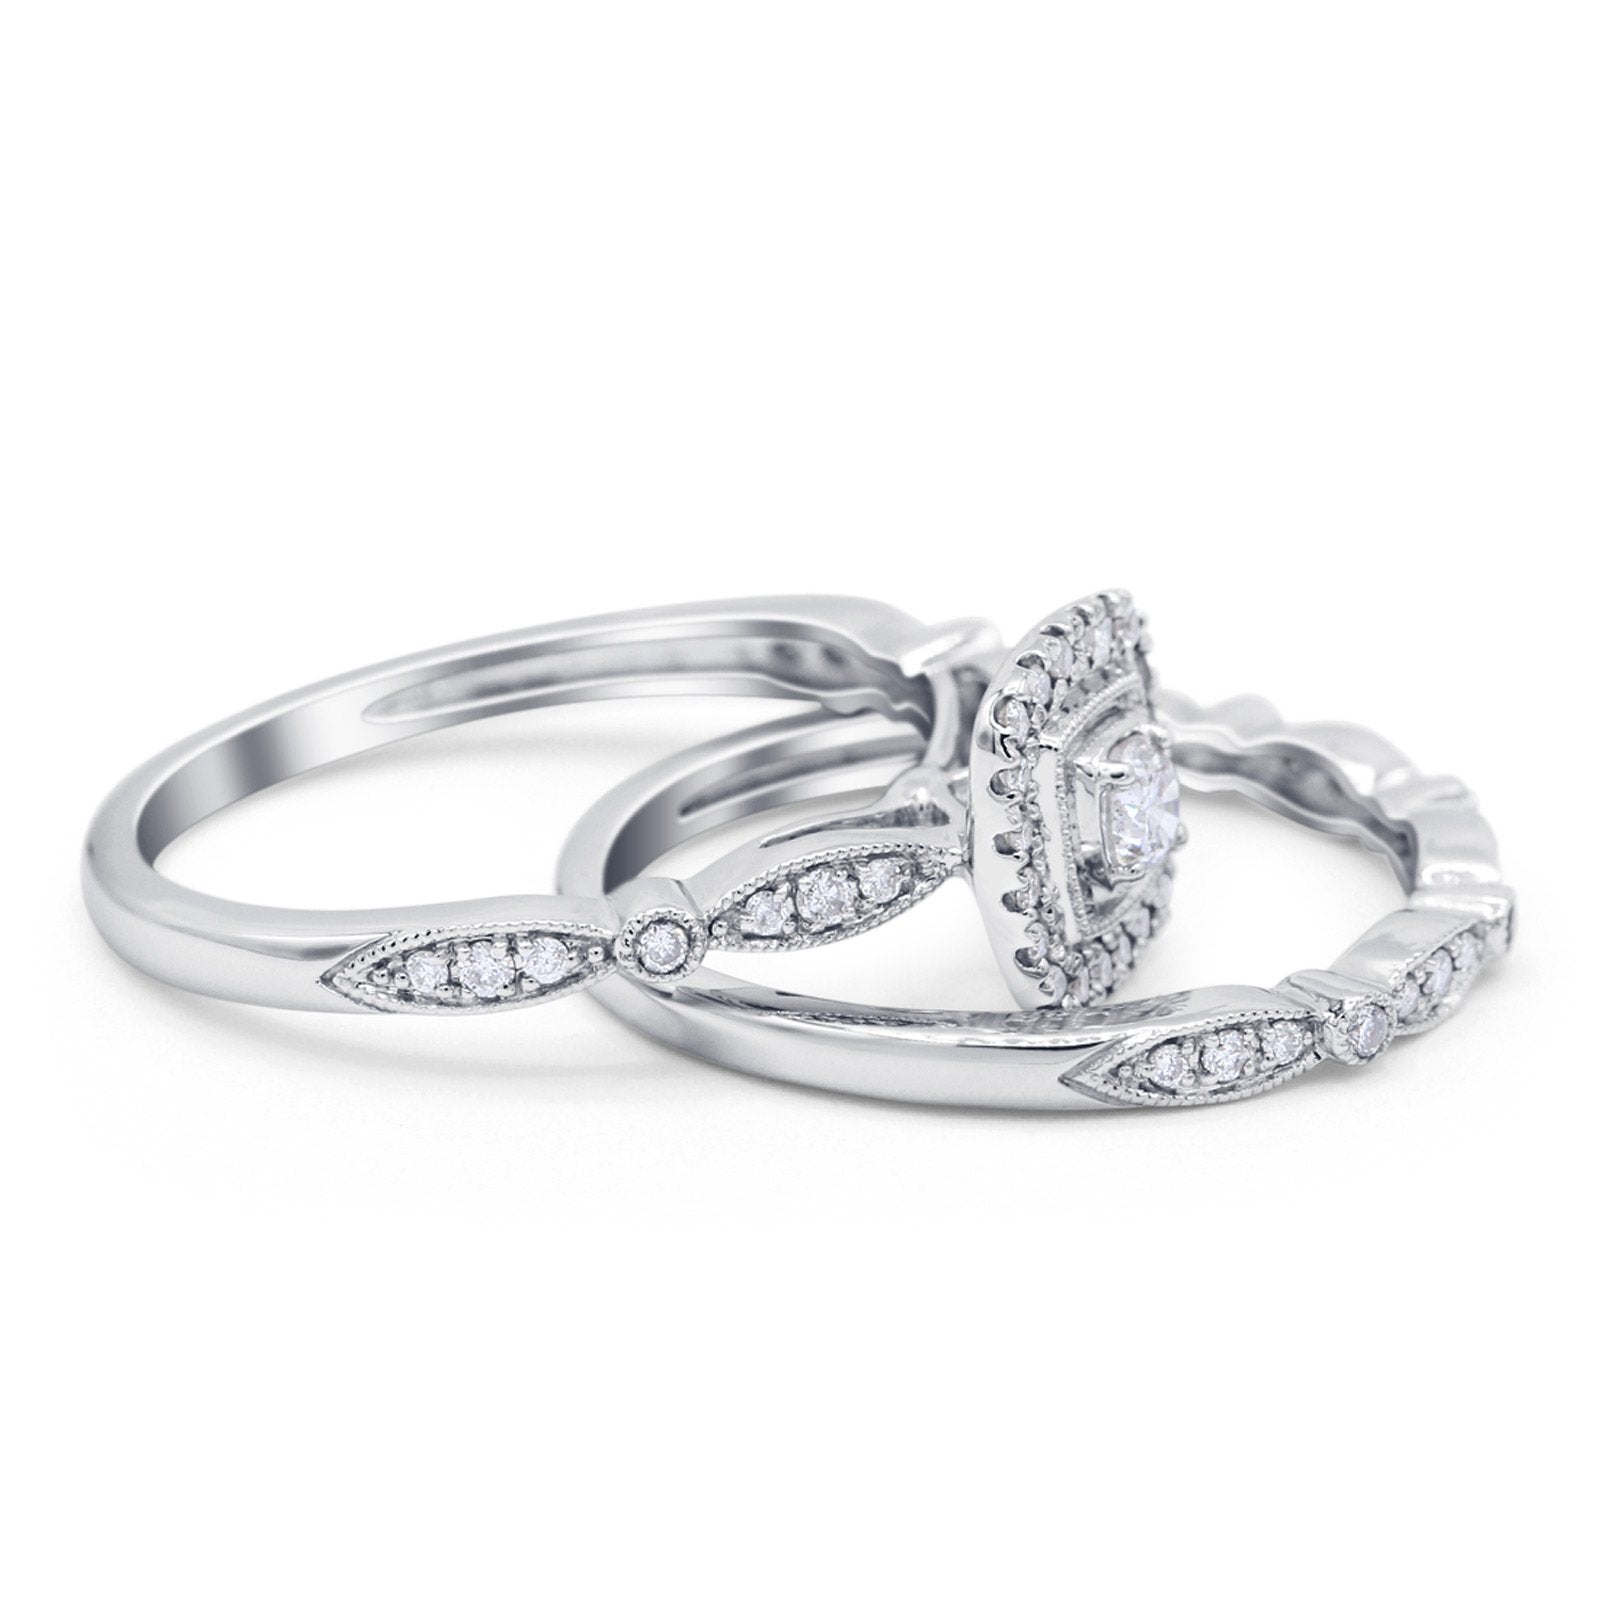 14K Gold 0.39ct Square Shape 8.5mm G SI Diamond Engagement Bridal Set Wedding Ring